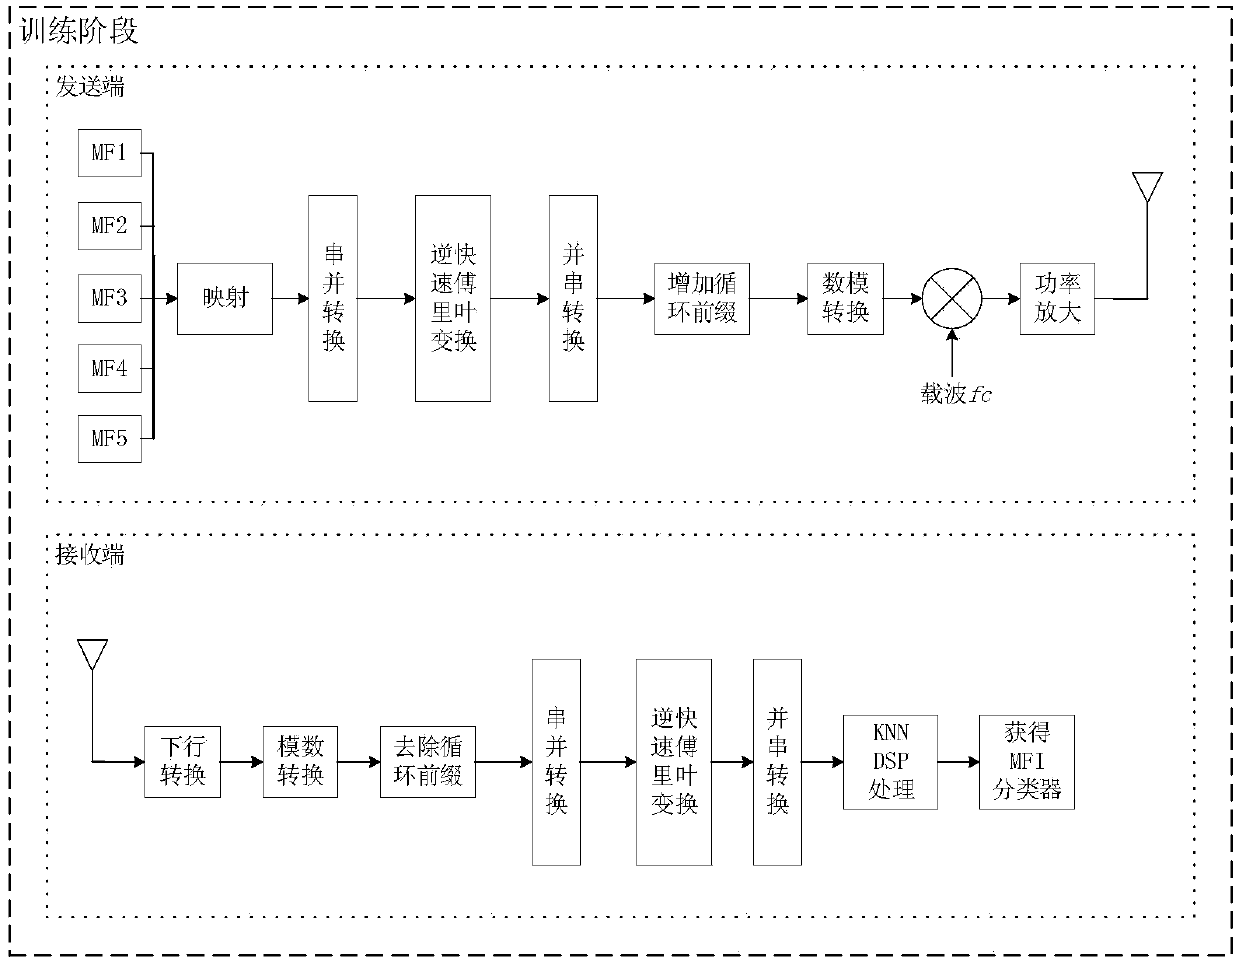 Elastic optical network modulation format identification method based on KNN